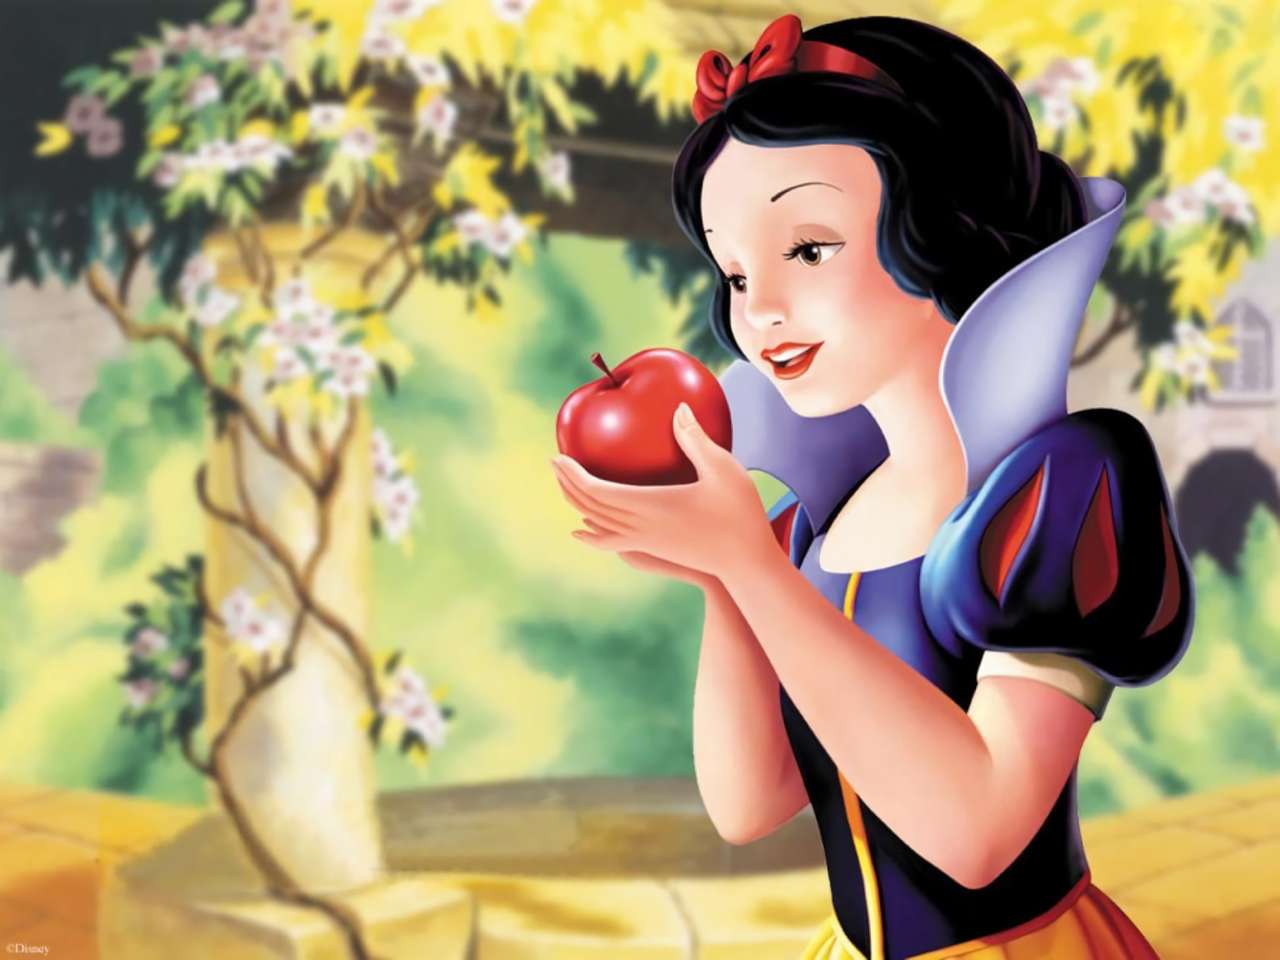 Snow White online puzzle